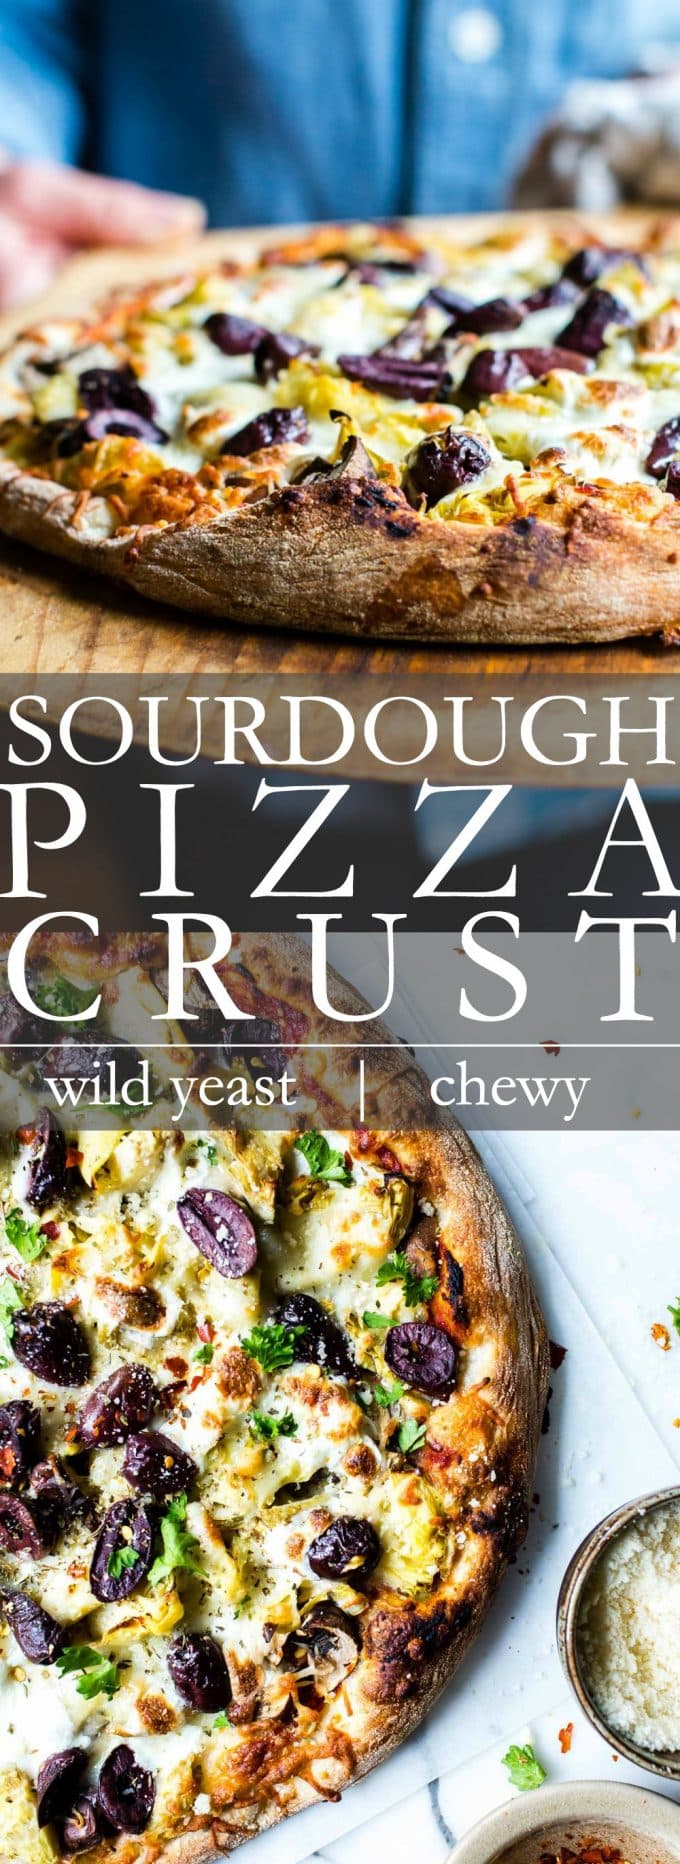 Pinterest long pin for Sourdough Pizza Crust